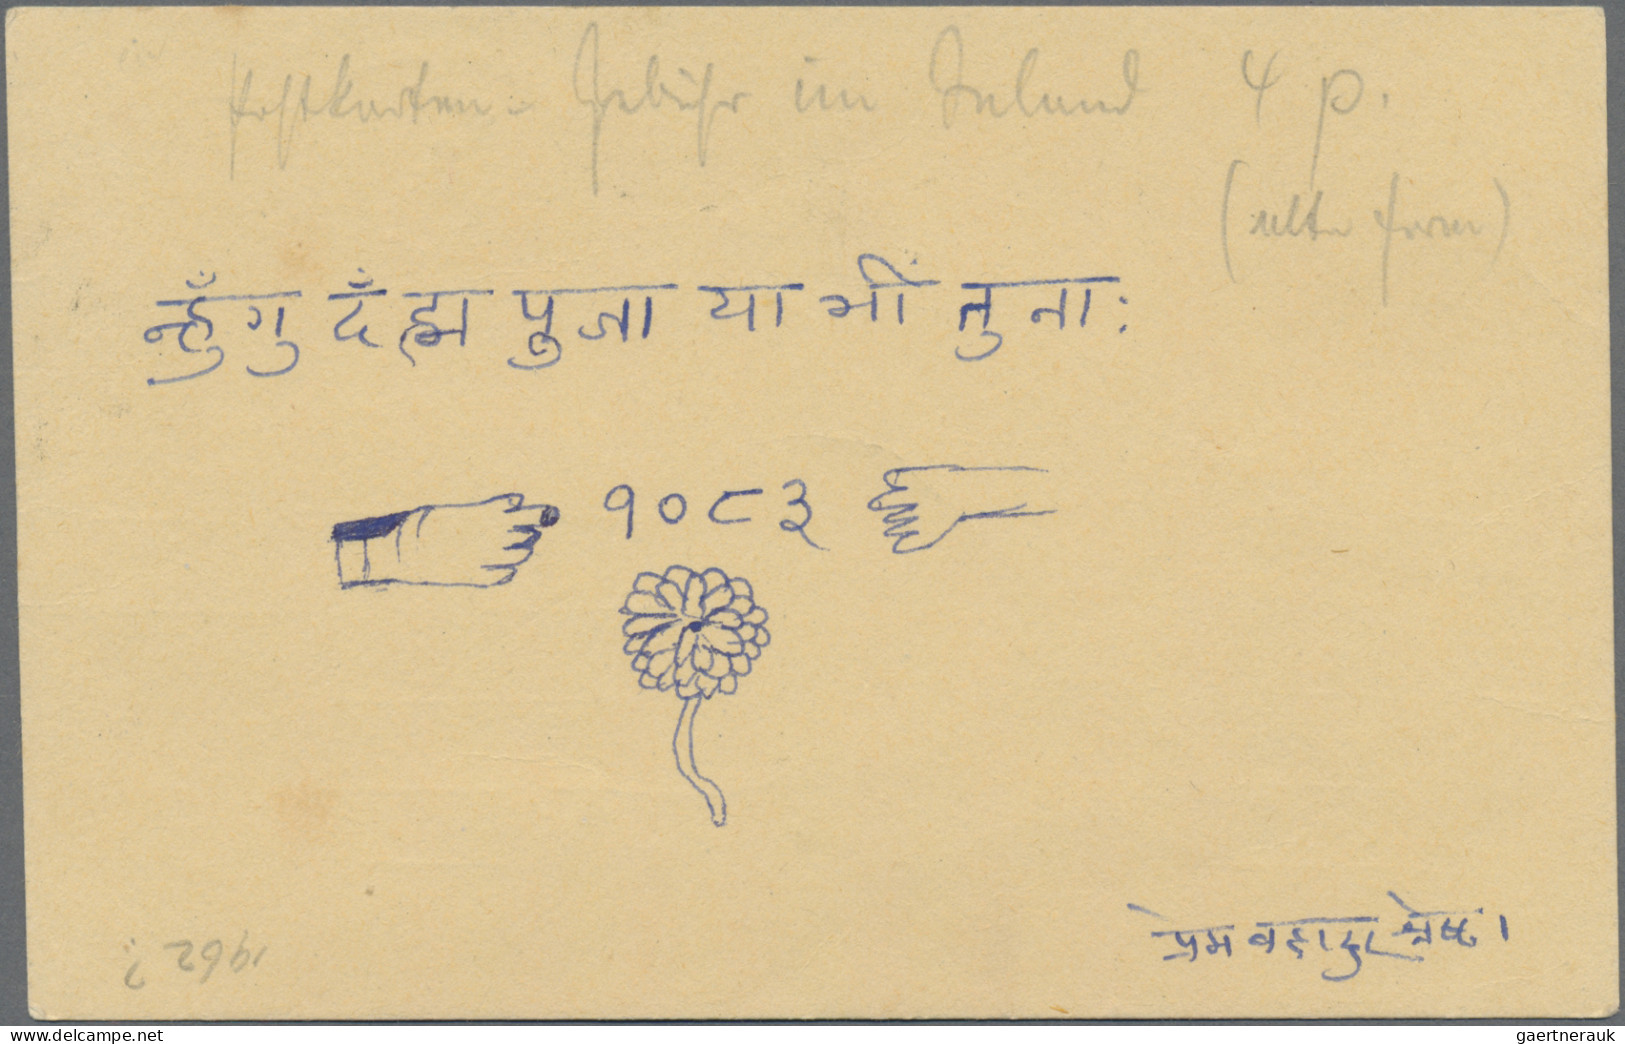 Nepal - postal stationery: 1959 'Nepal's admission to the UPU': Six postal stati